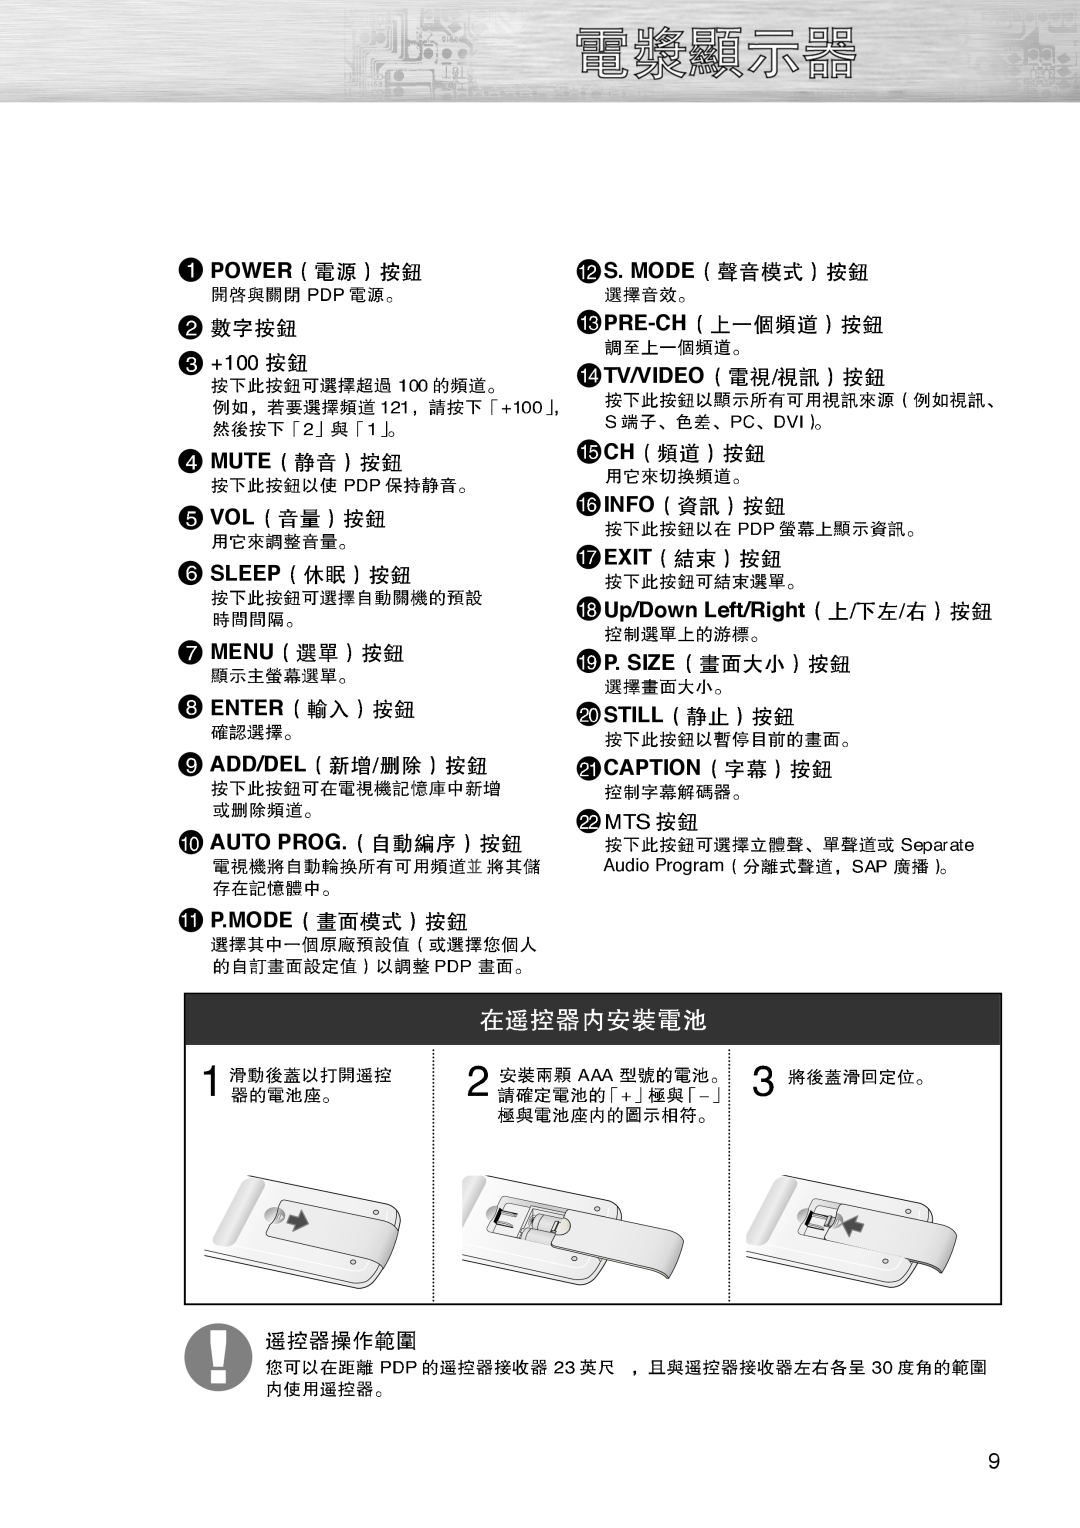 Samsung PL-42D4S manual Power Mute Vol Sleep Menu Enter Add/Del Auto Prog P.Mode, Caption, Audio Program 